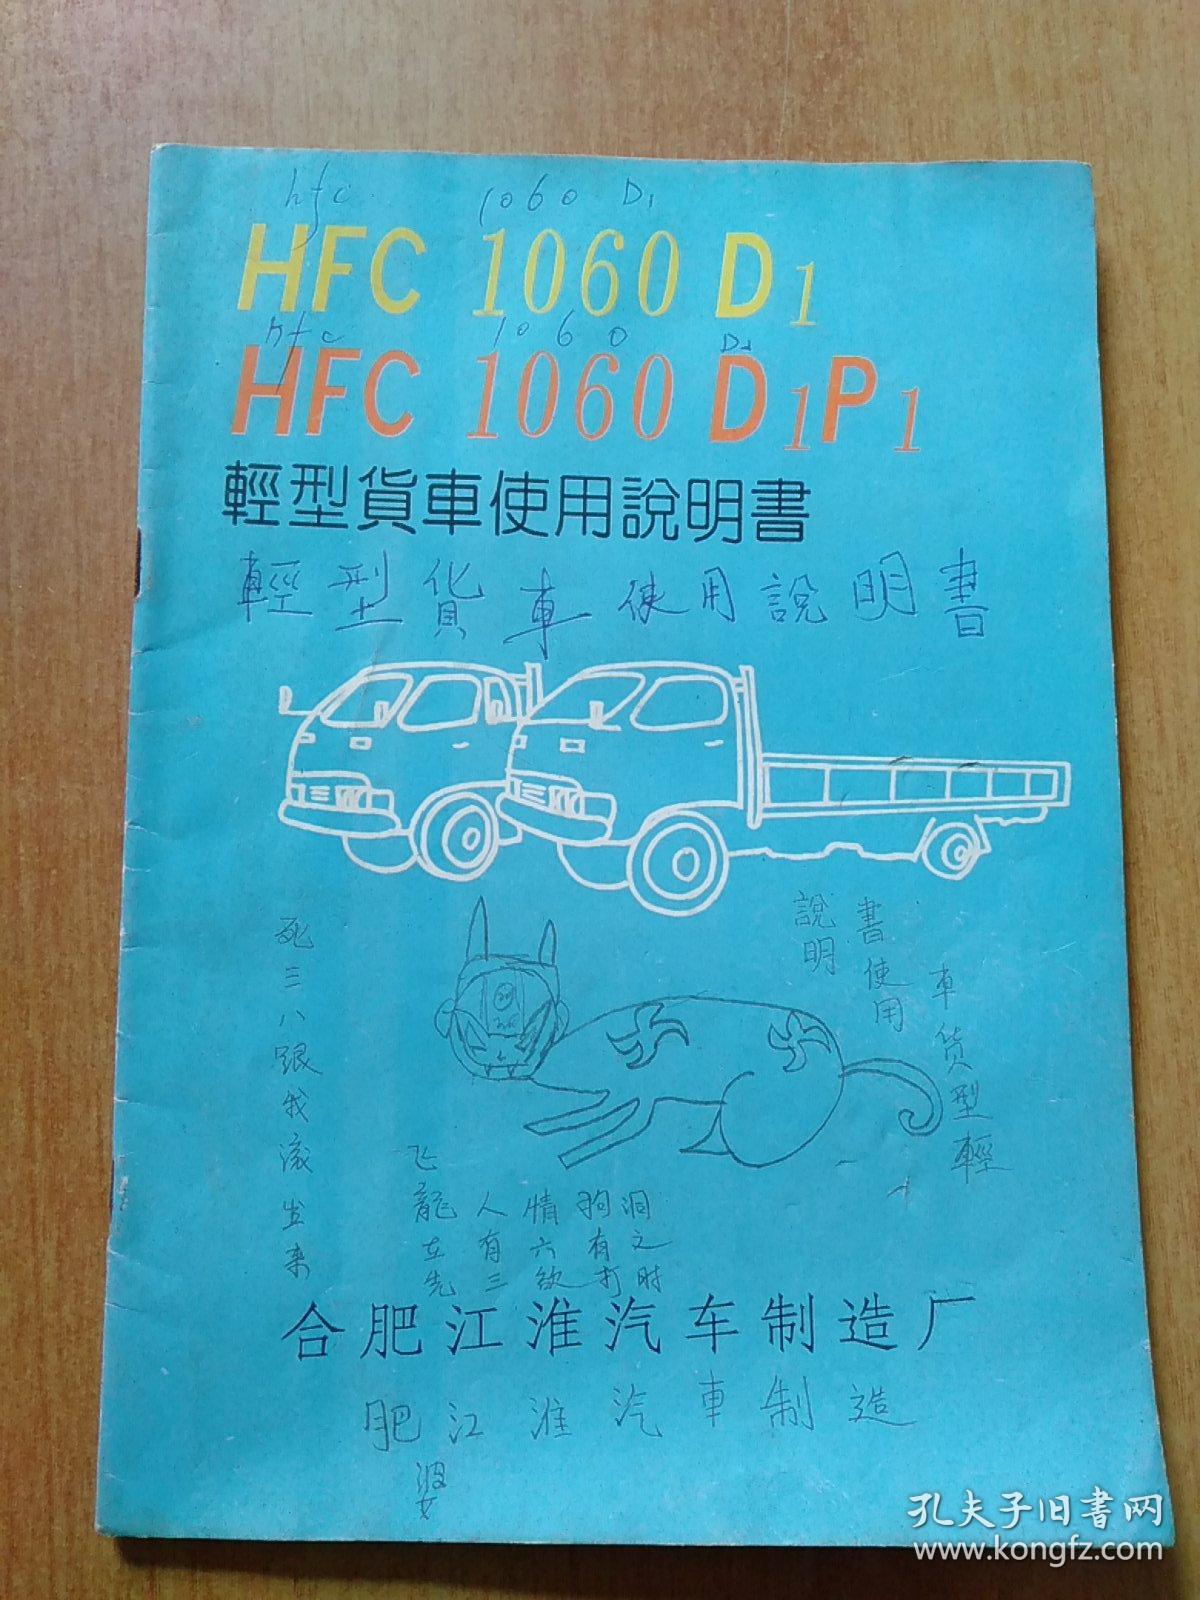 HFC 1060 D1\/HFC 1060 D1P1 轻型货车使用说明书